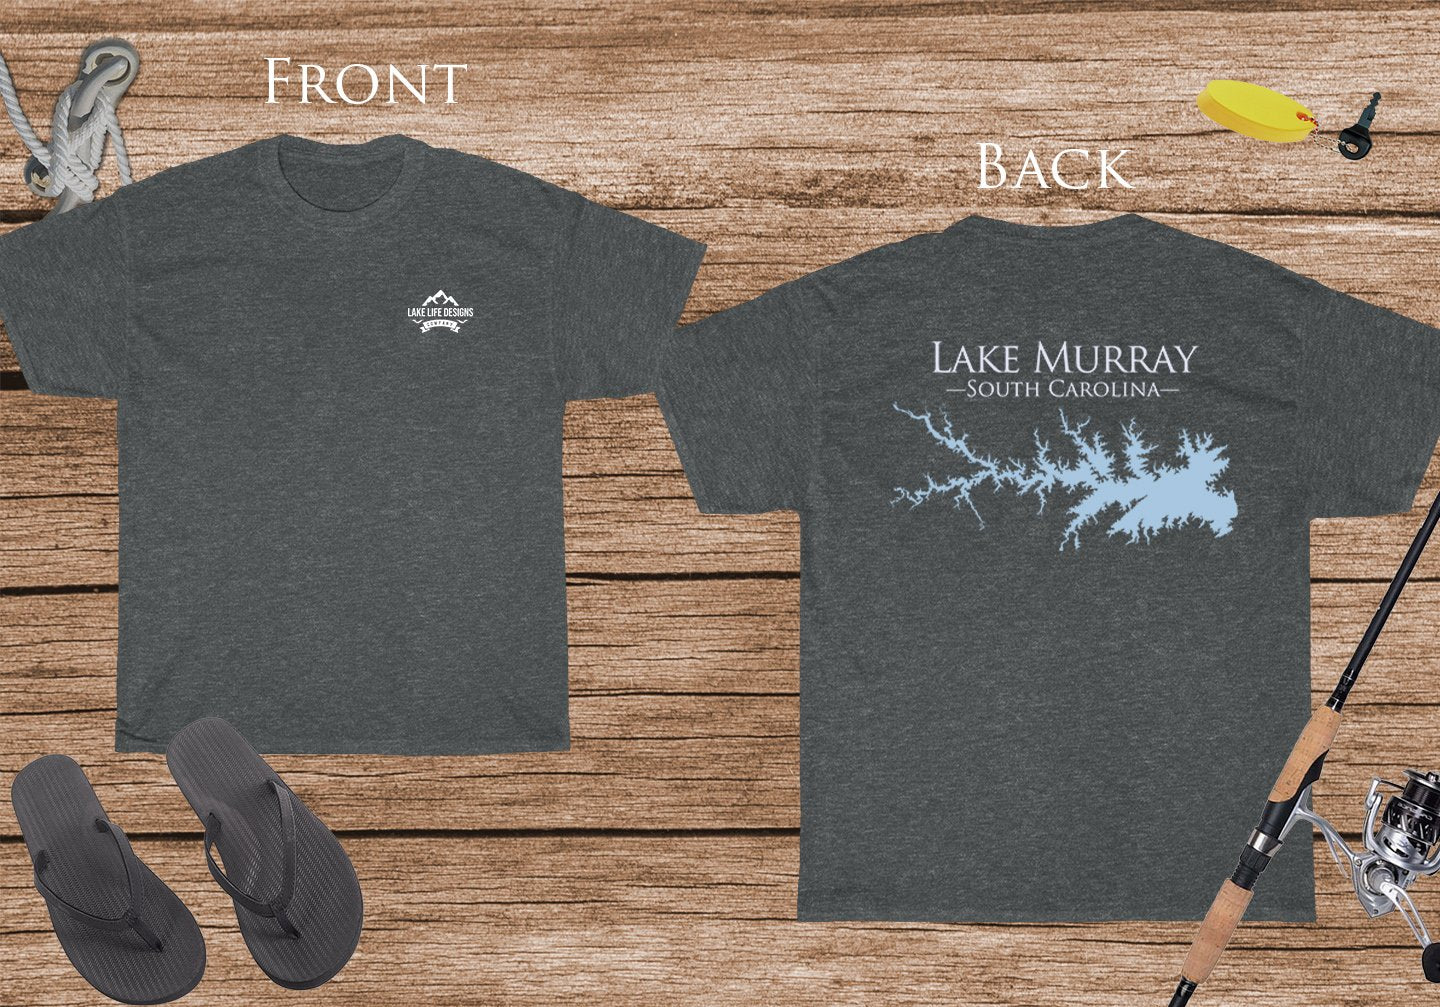 Lake Murray Life - Cotton Short Sleeved - FRONT & BACK PRINTED - Short Sleeved Cotton Tee - South Carolina Lake